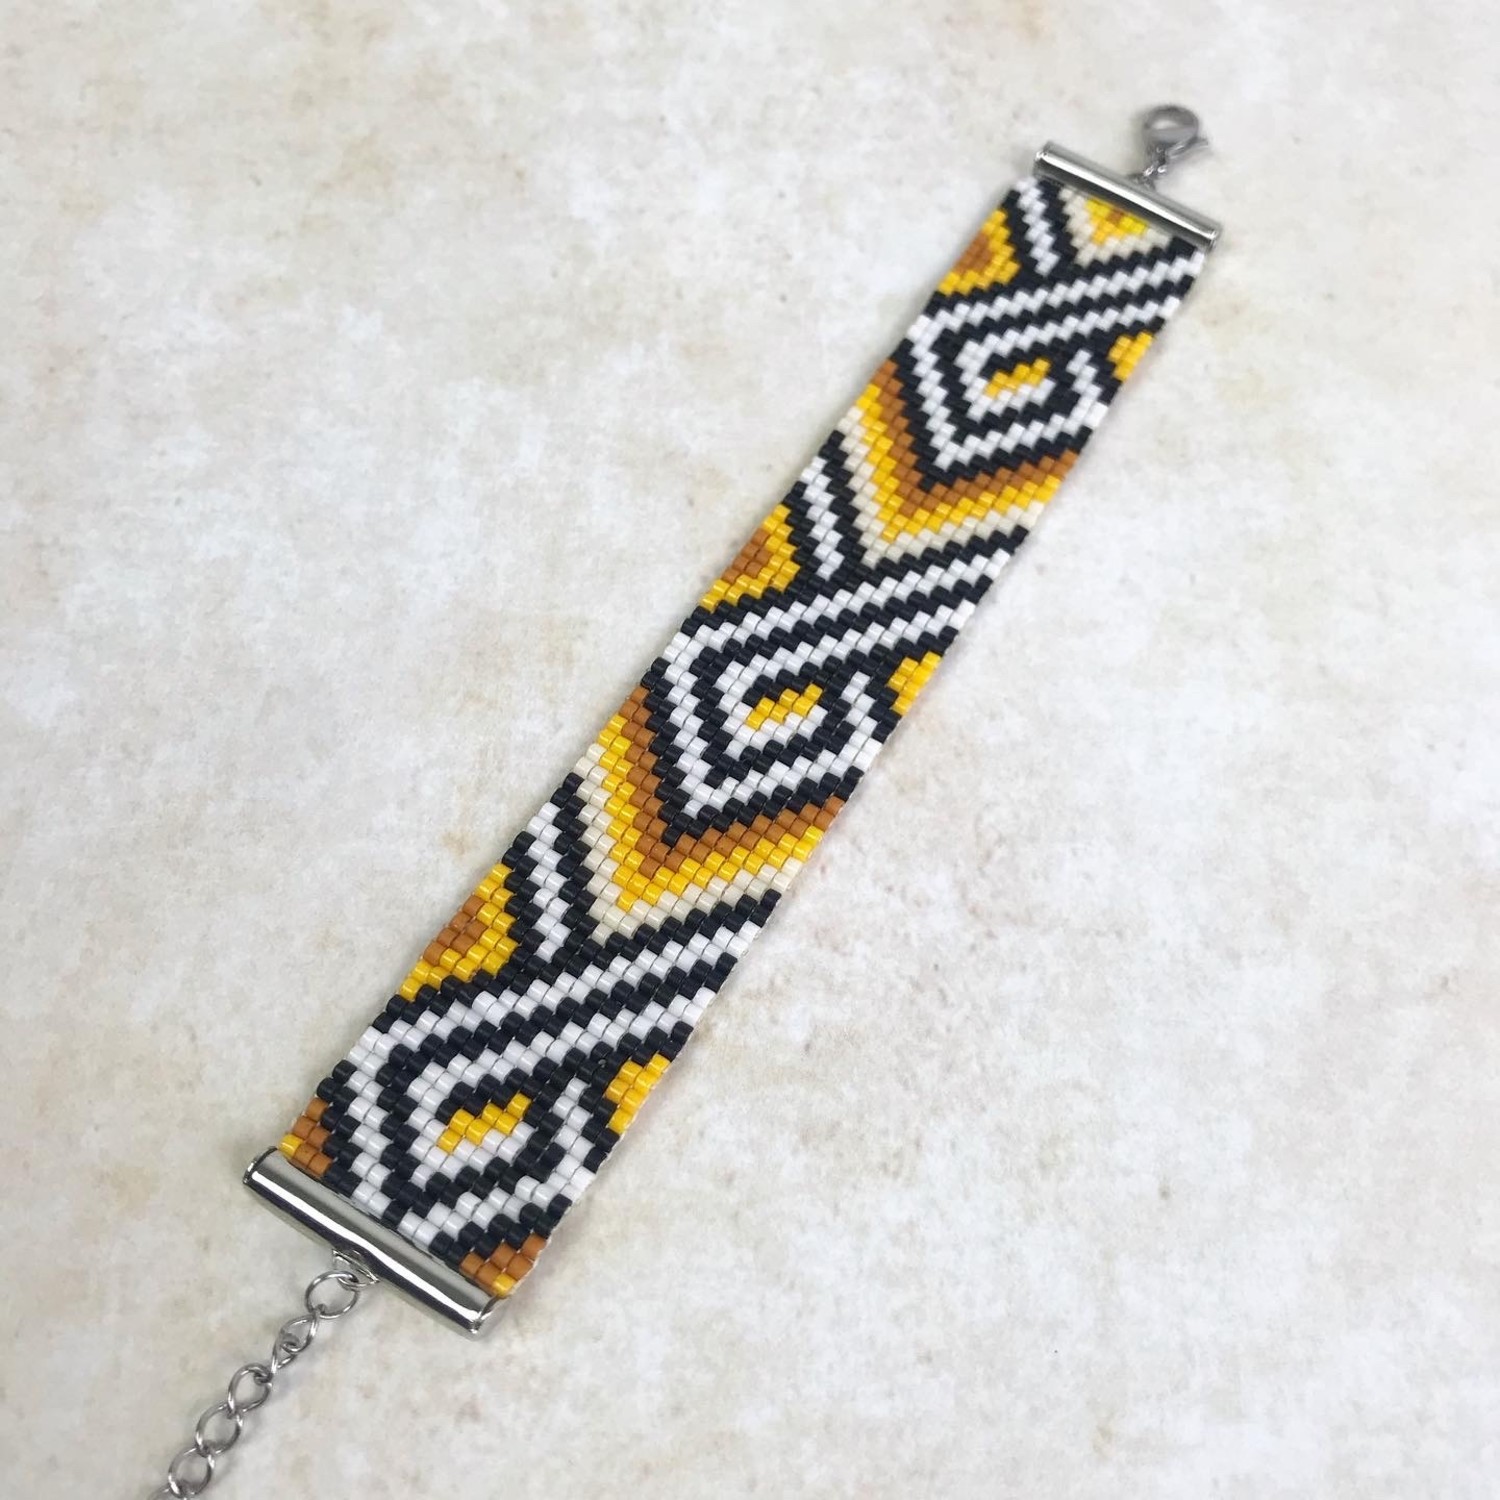 Free Bead Loom Patterns  Bracelet Ideas  Cutesy Crafts